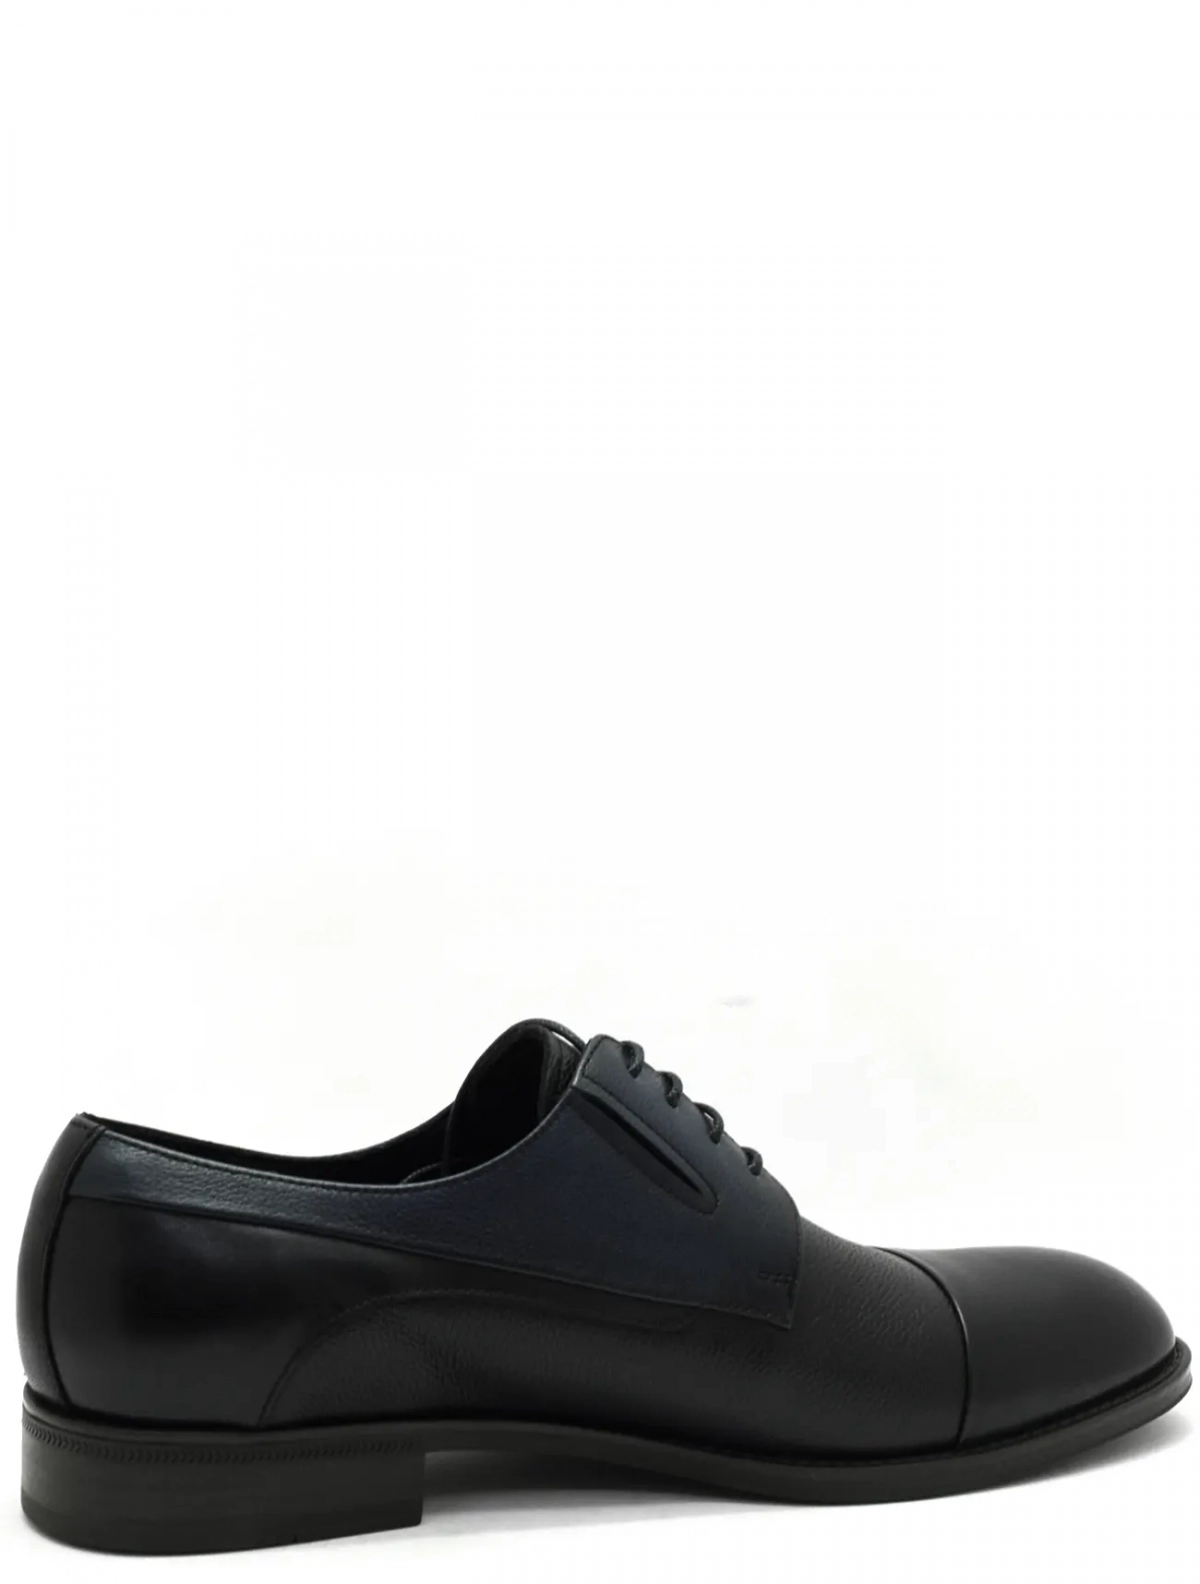 Roscote K520C20-A01DB01DB03T4136H мужские туфли